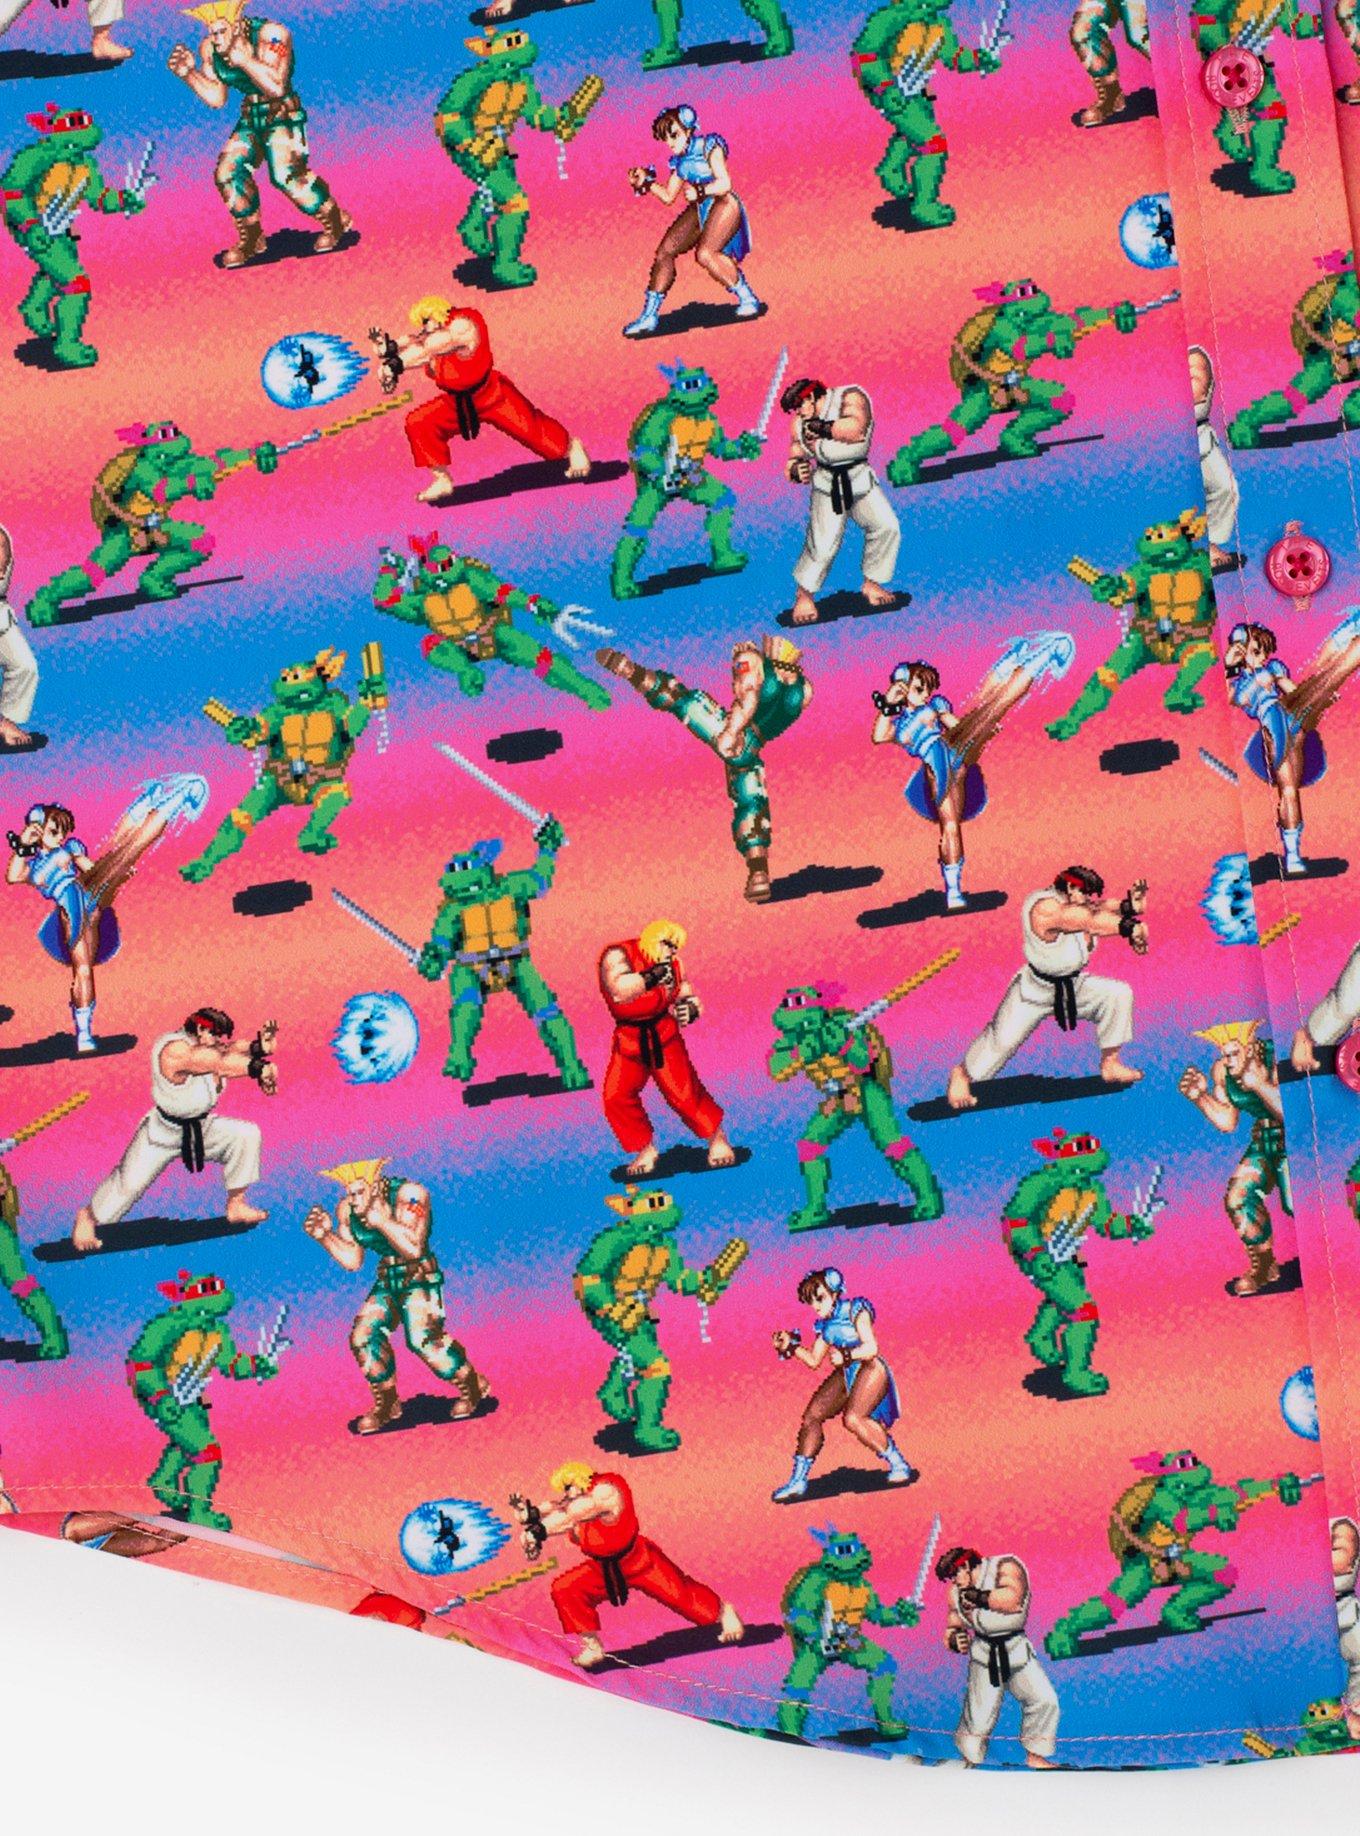 RSVLTS Teenage Mutant Ninja Turtles vs. Street Fighter Battle of the Bits Button-Up Shirt, MULTI, alternate